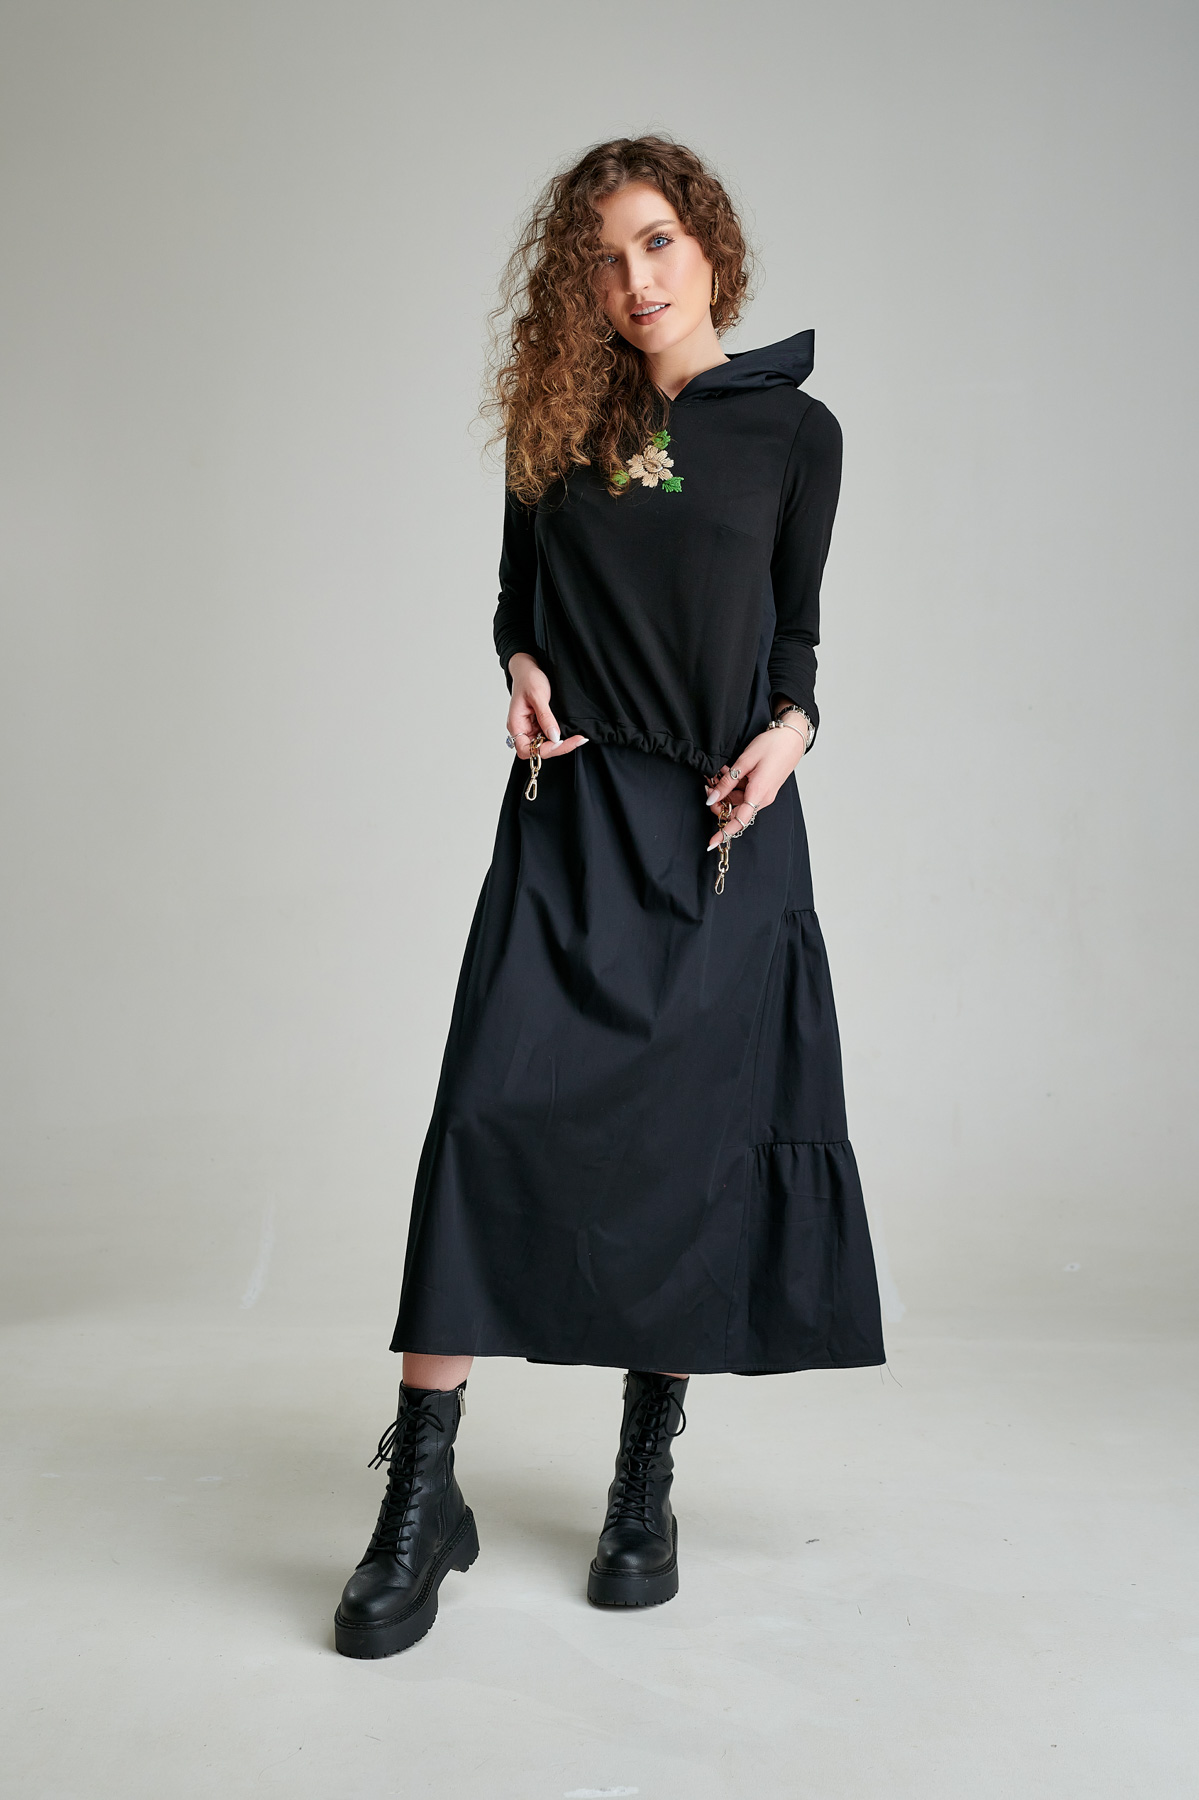 INDRA casual dress in black poplin and punto roma. Natural fabrics, original design, handmade embroidery